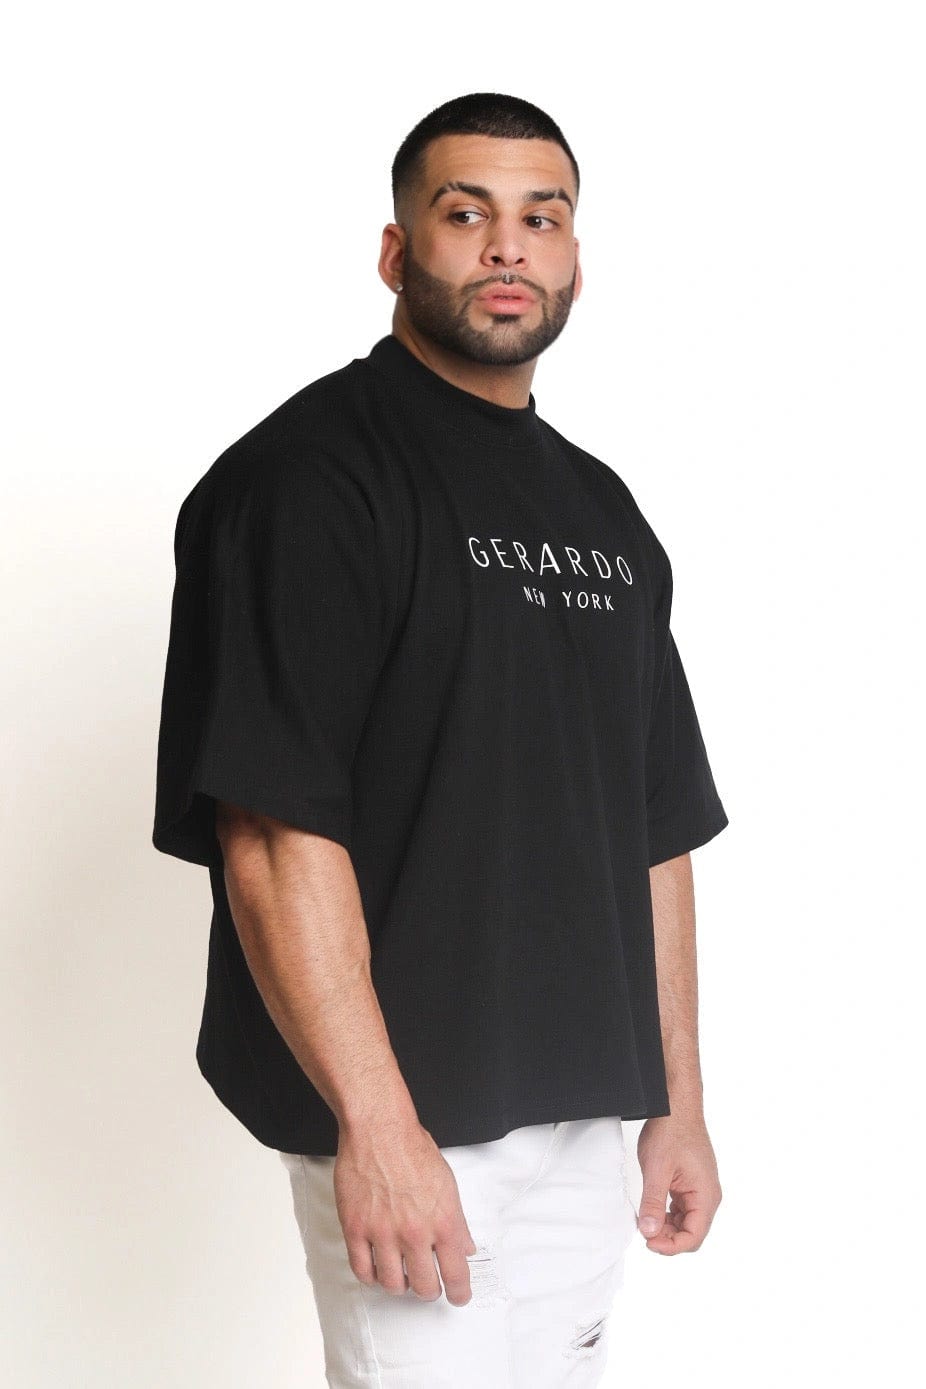 Mens Black Boxy Base Oversize T-Shirt - Gerardo Collection